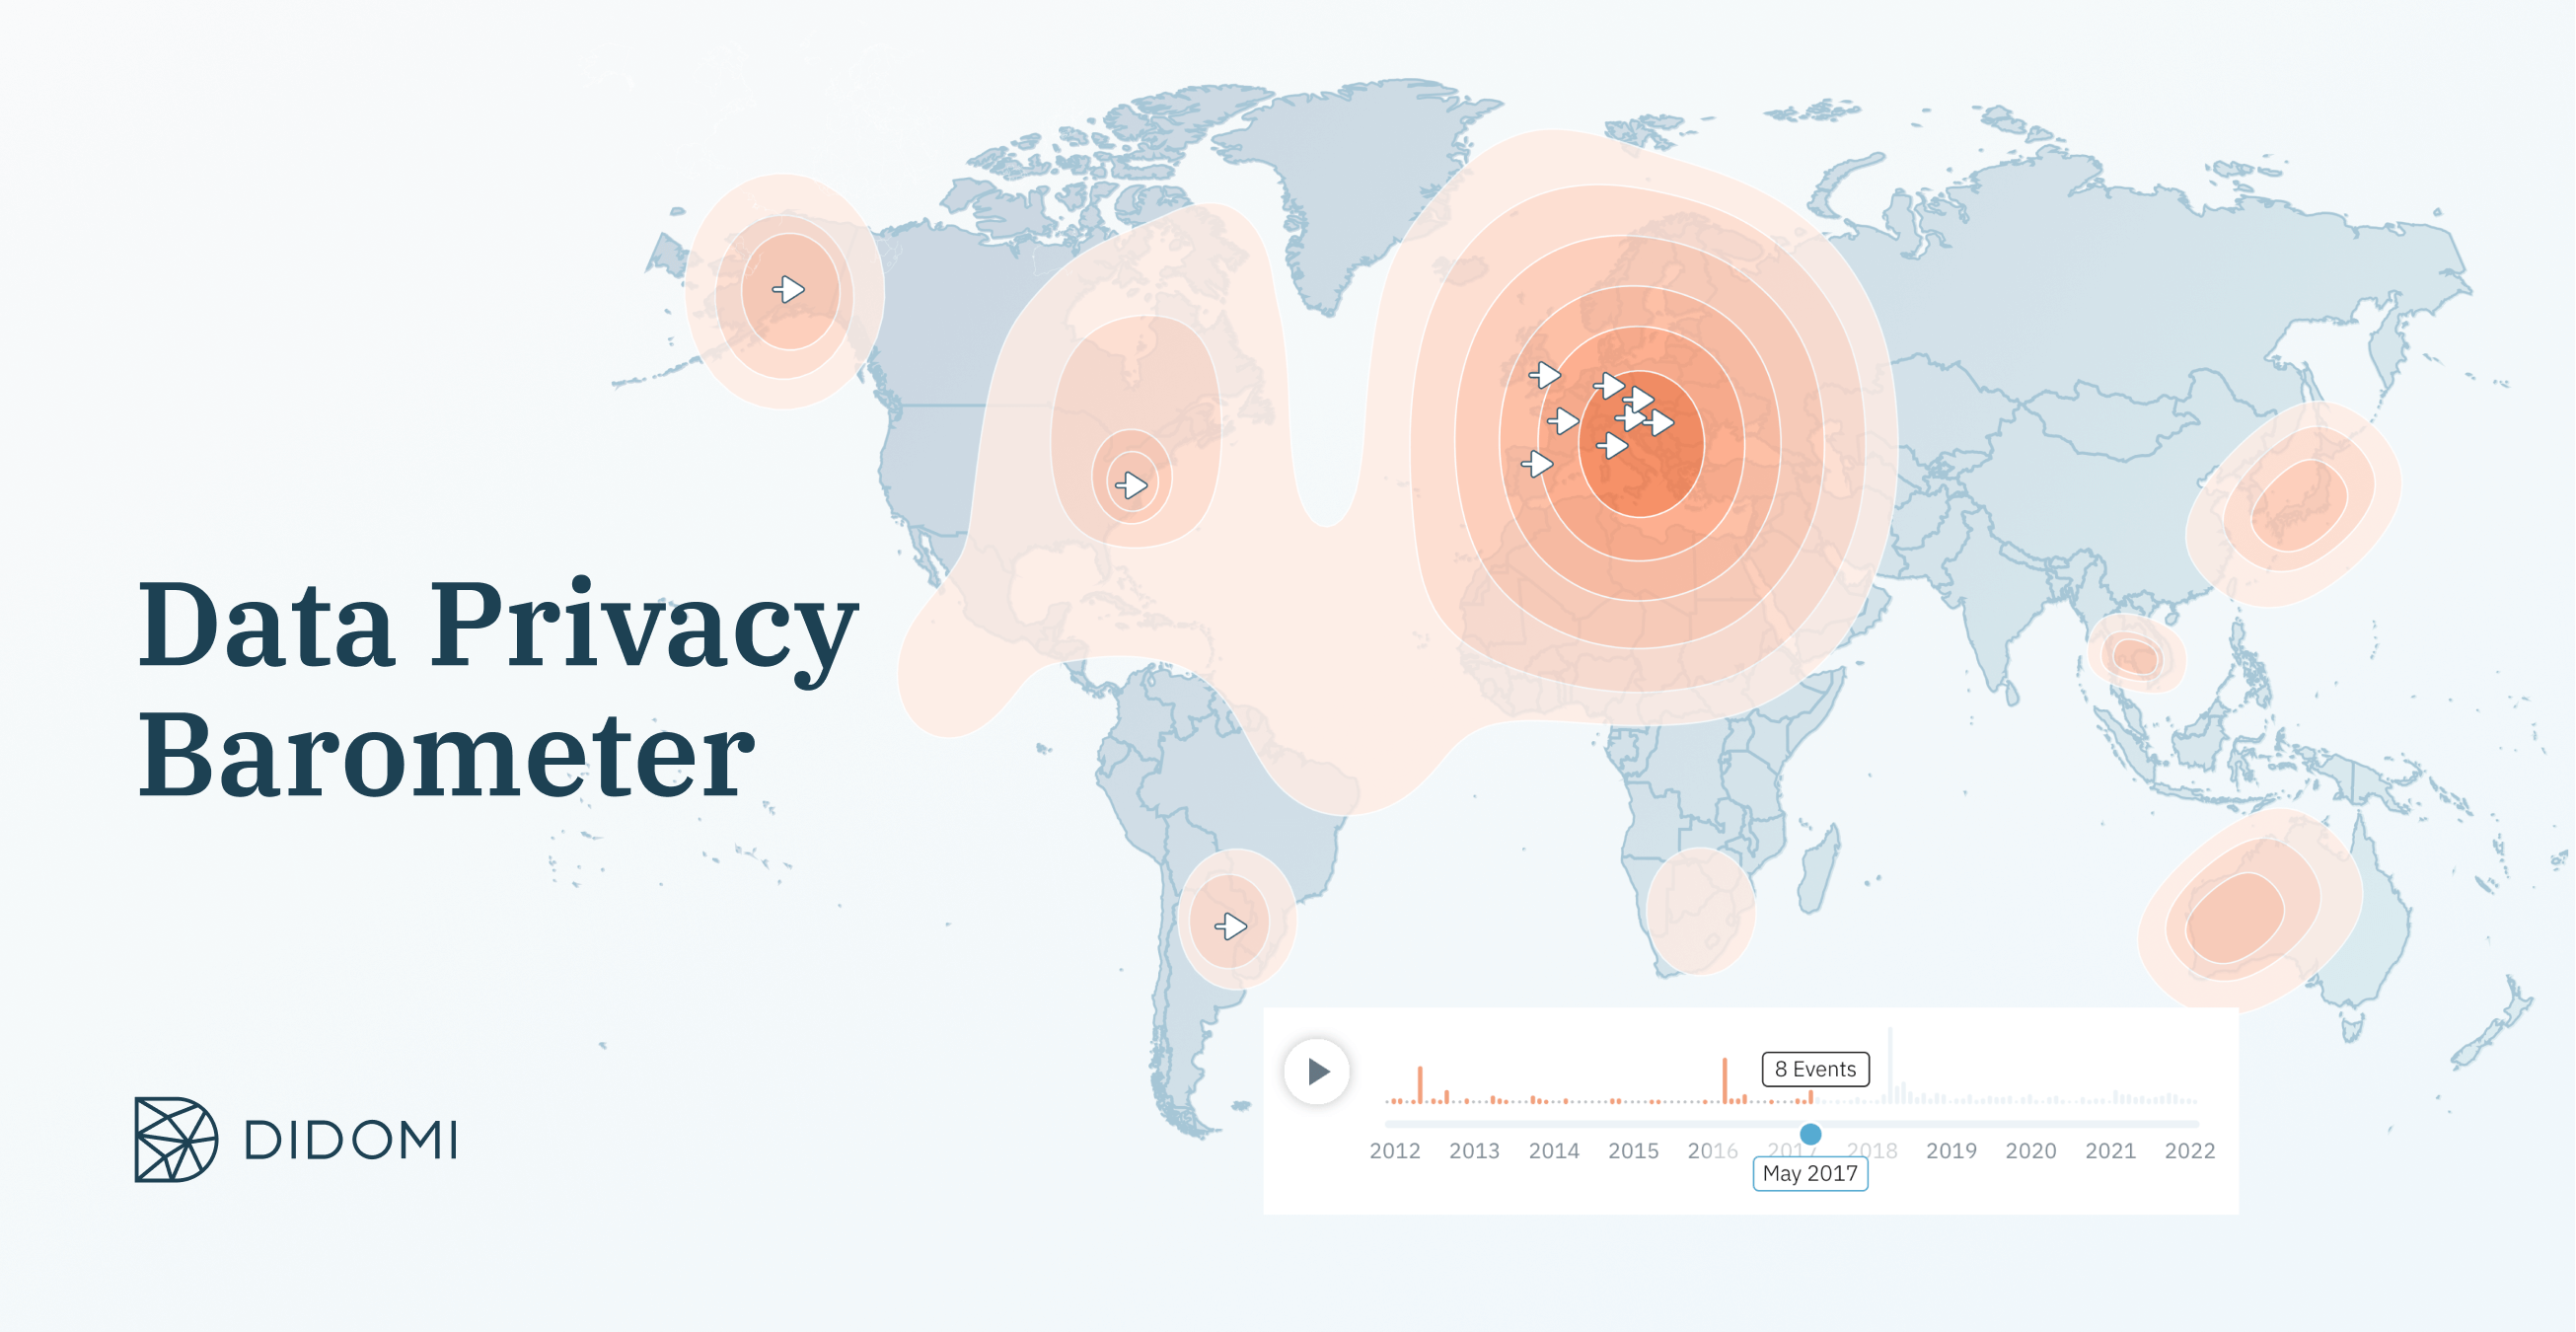 data-privacy-barometer-didomi